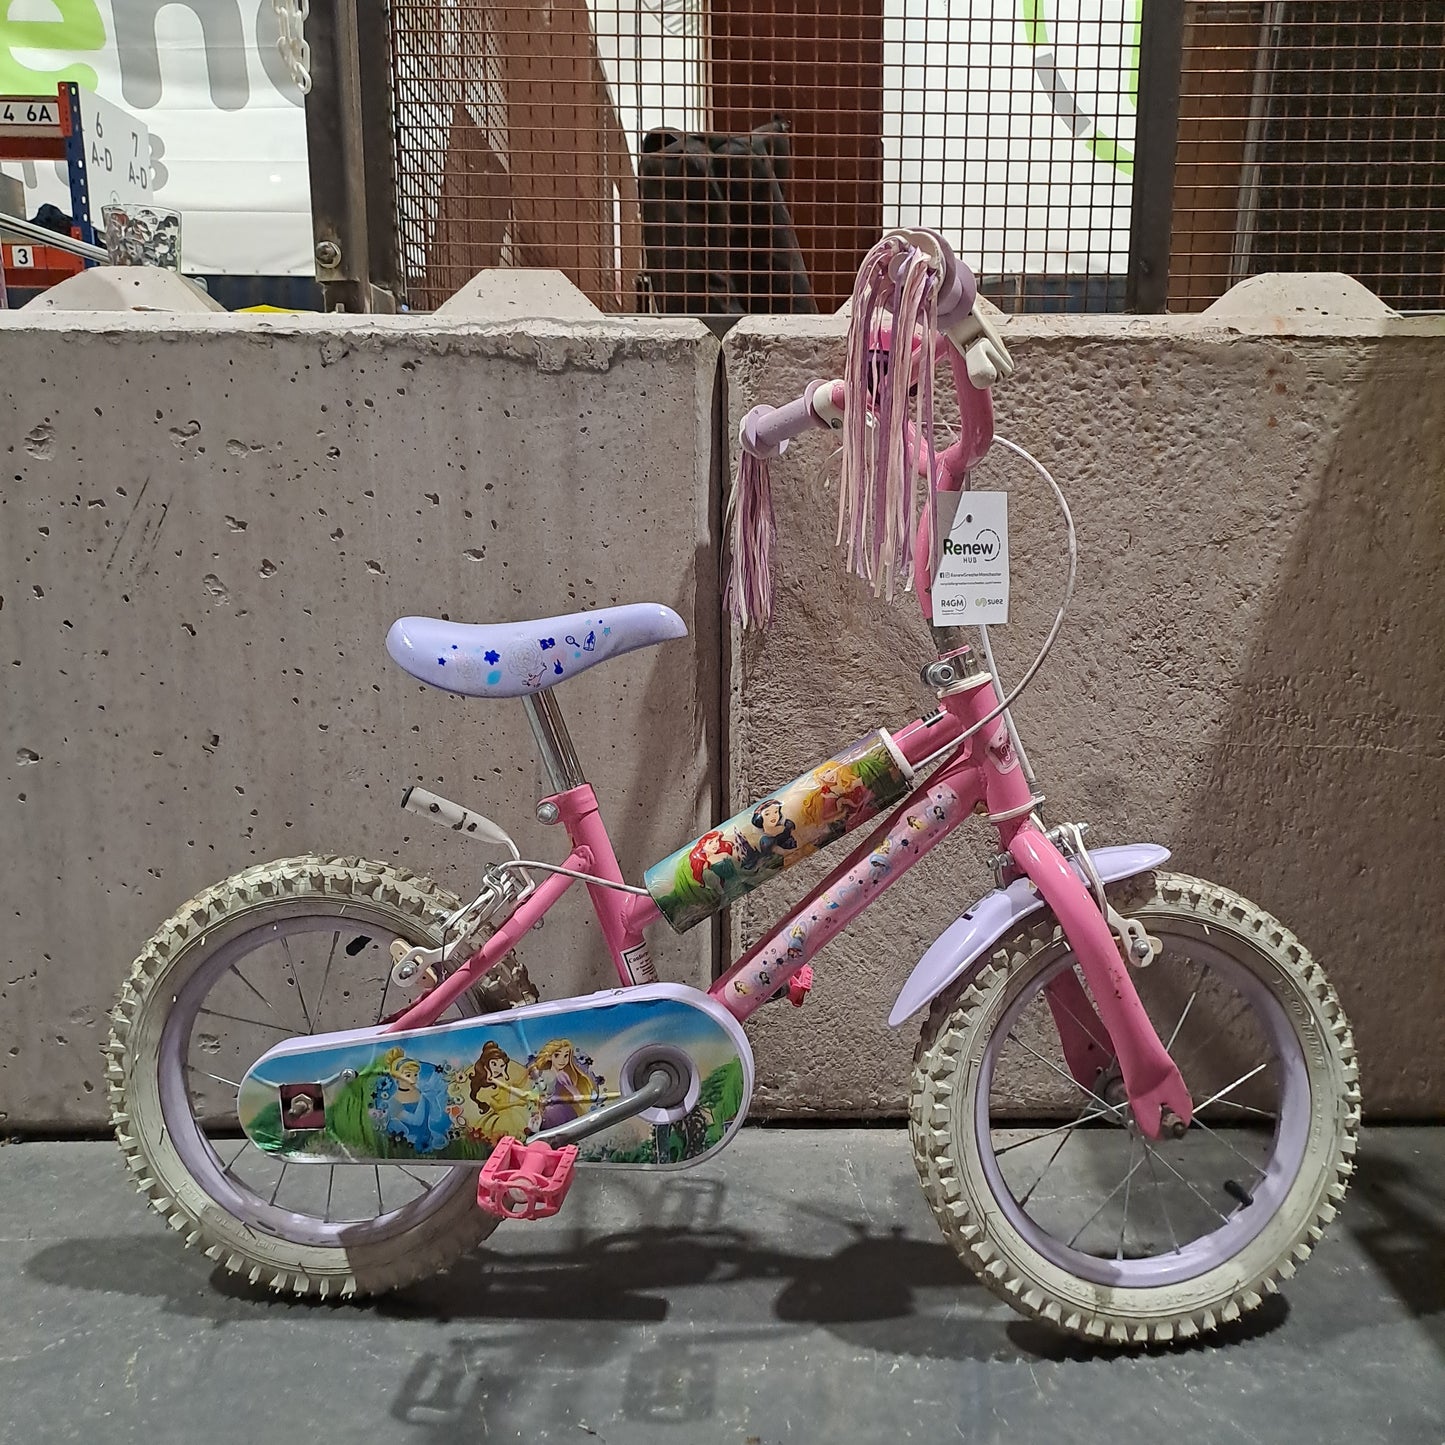 Serviced Disney Princess Bike Pink and Purple (14")